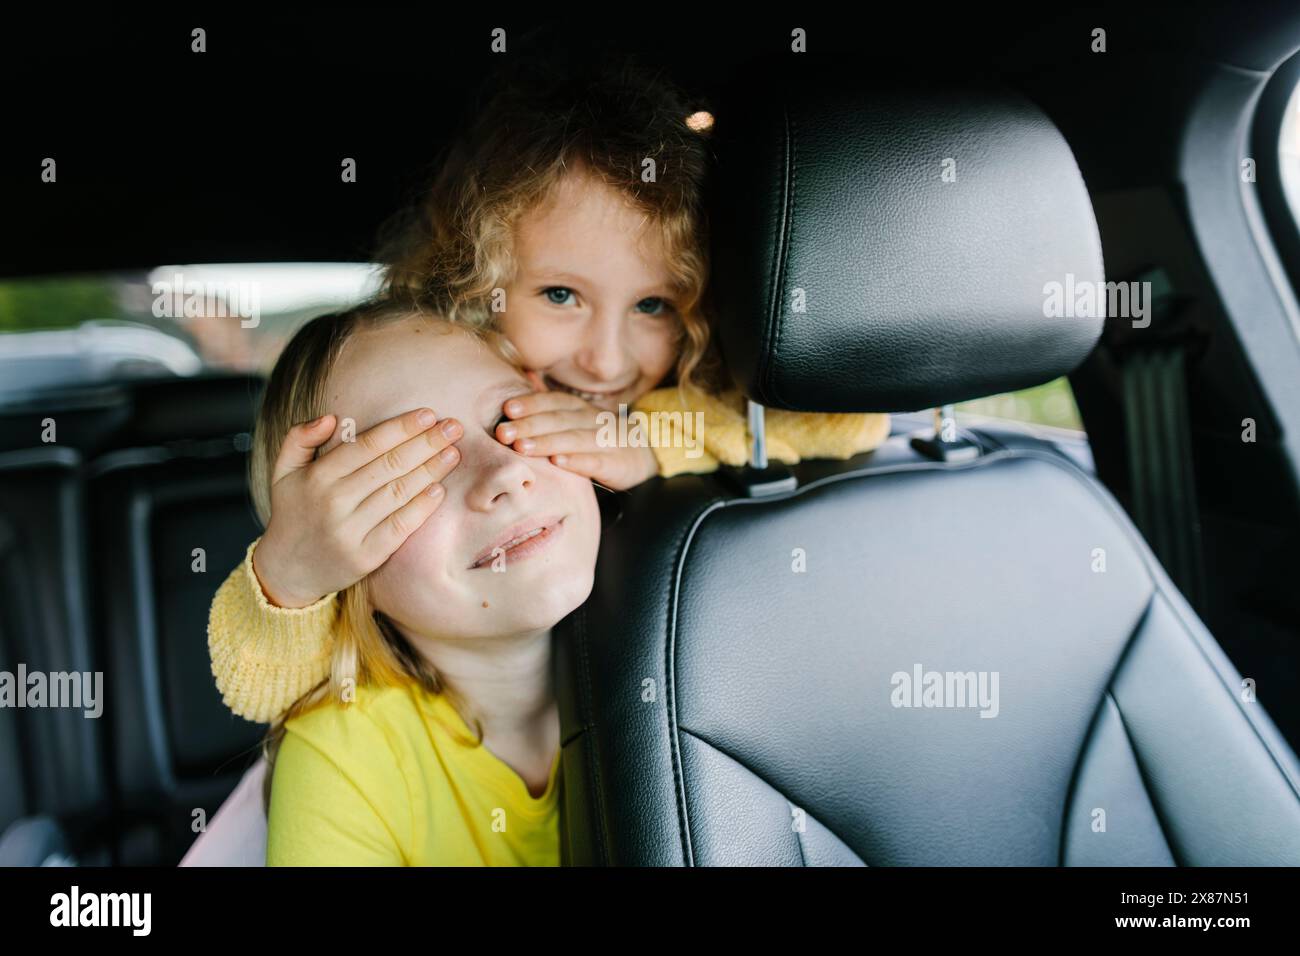 Girl covering eyes of sister in car Stock Photo